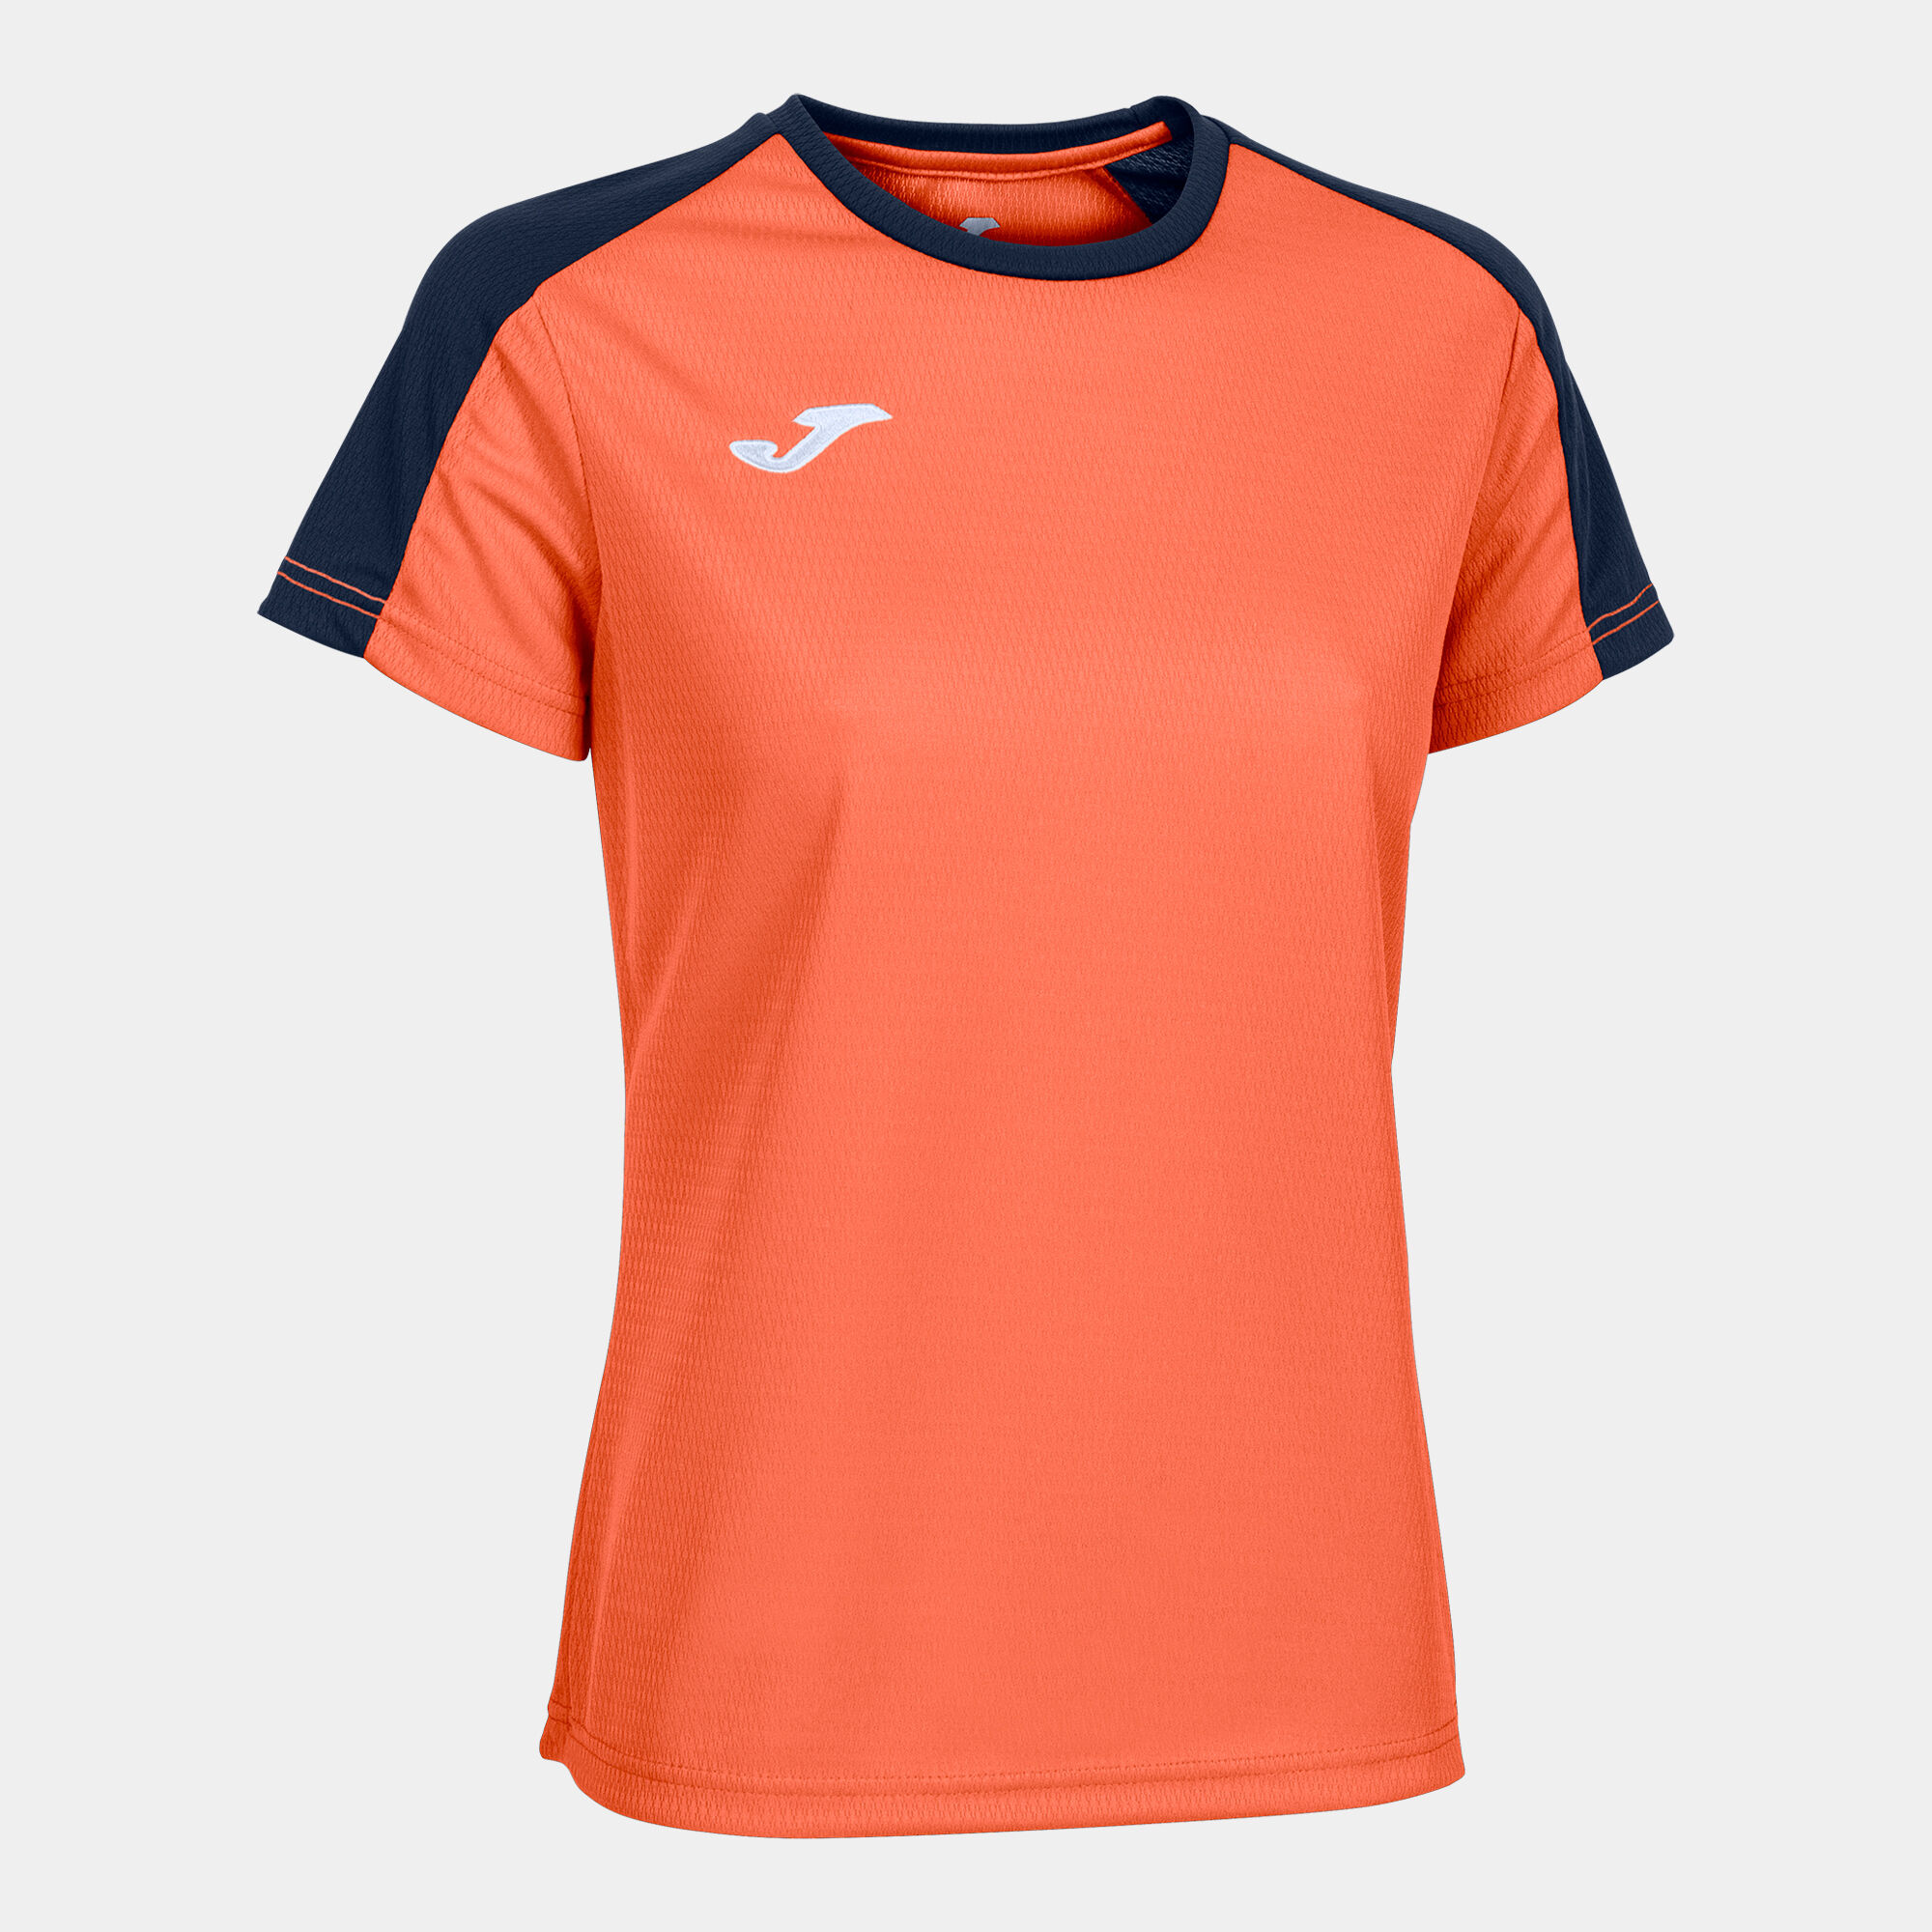 Camiseta manga corta mujer Eco Championship naranja flúor marino